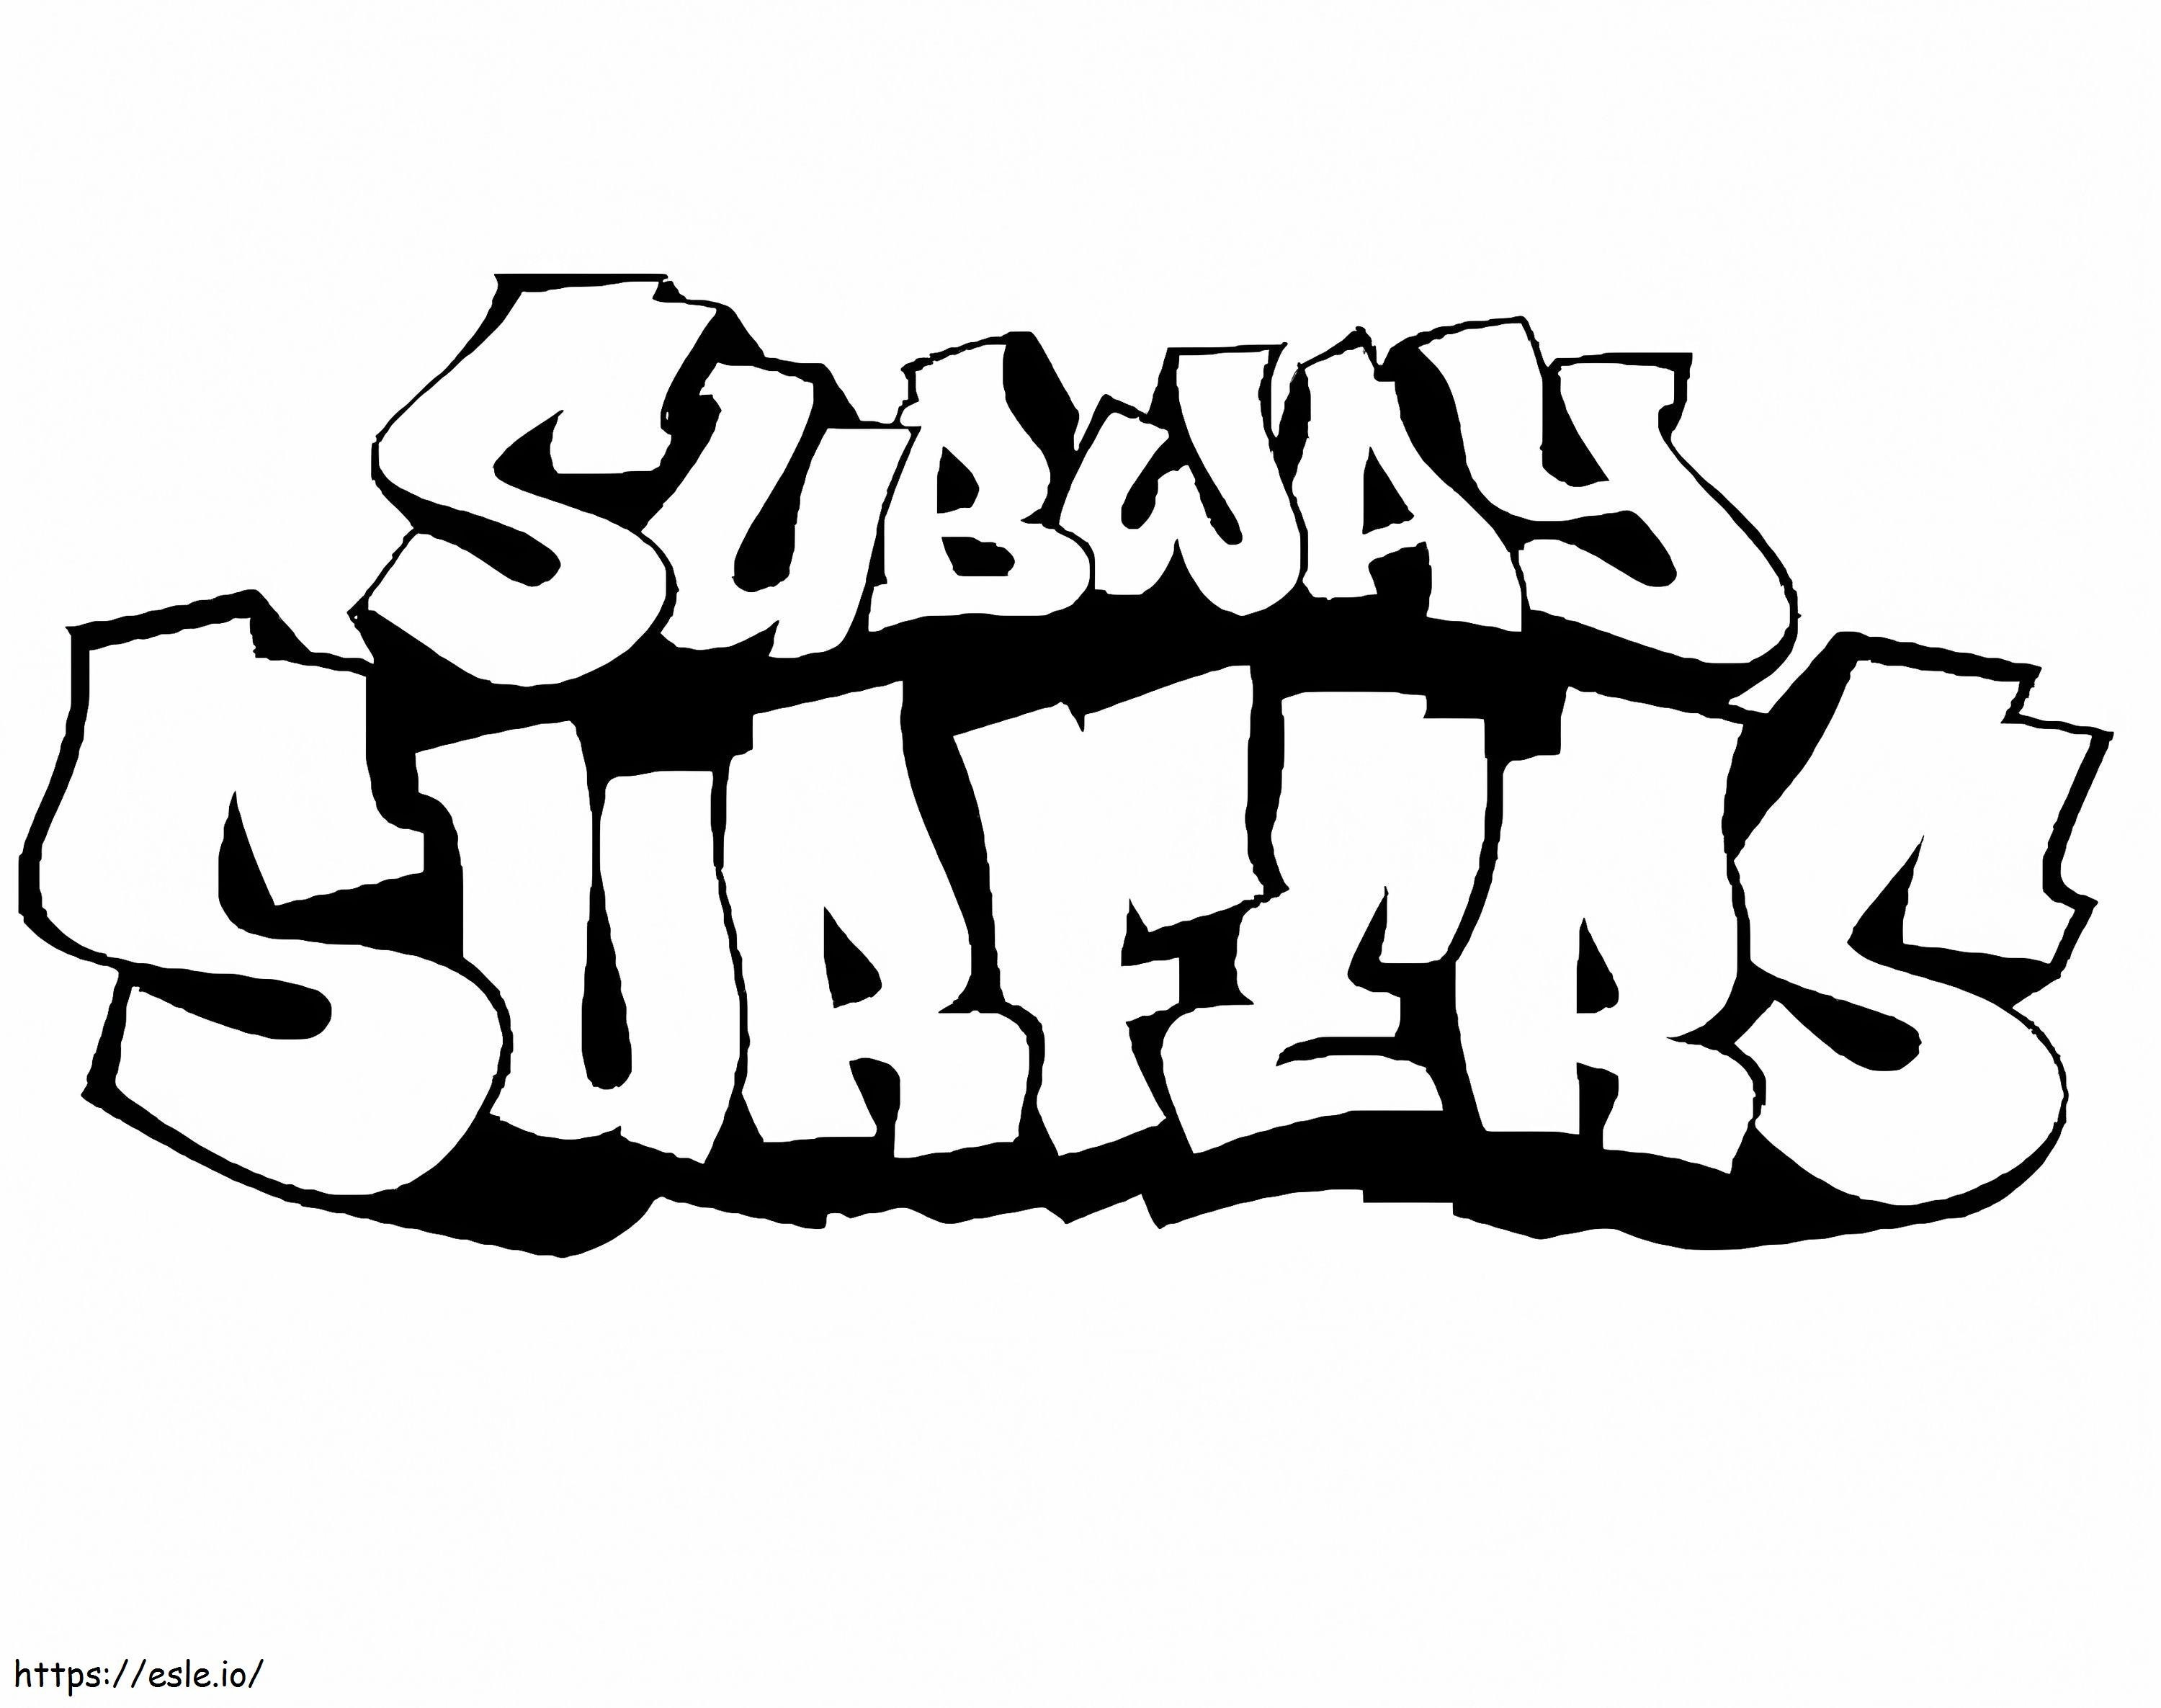 Logo Subway Surfers ausmalbilder